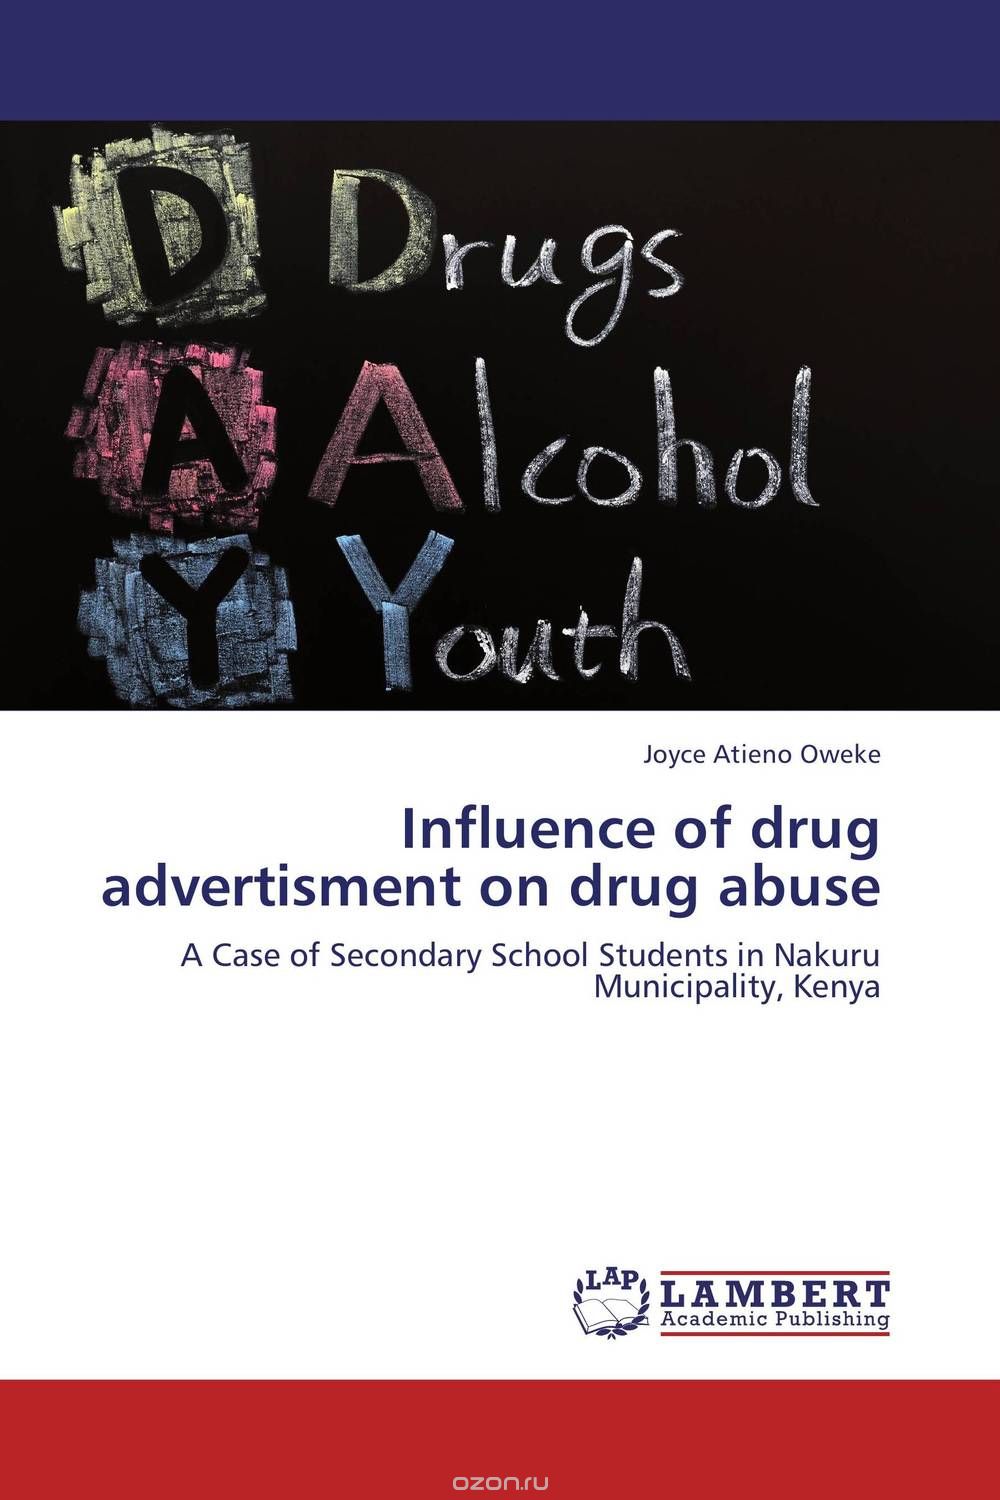 Скачать книгу "Influence of drug advertisment on drug abuse"